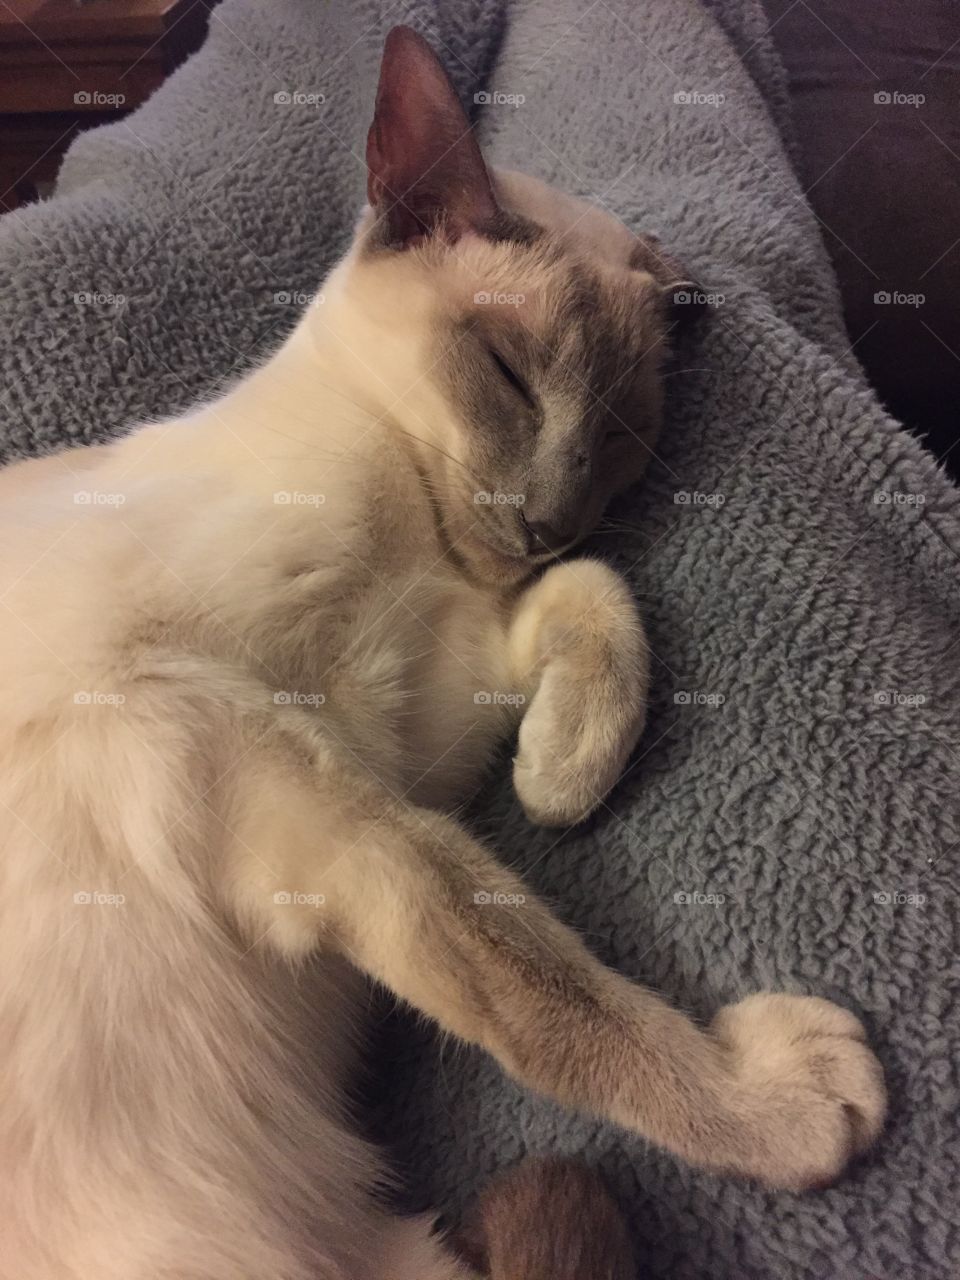 My Siamese cat having a snooze